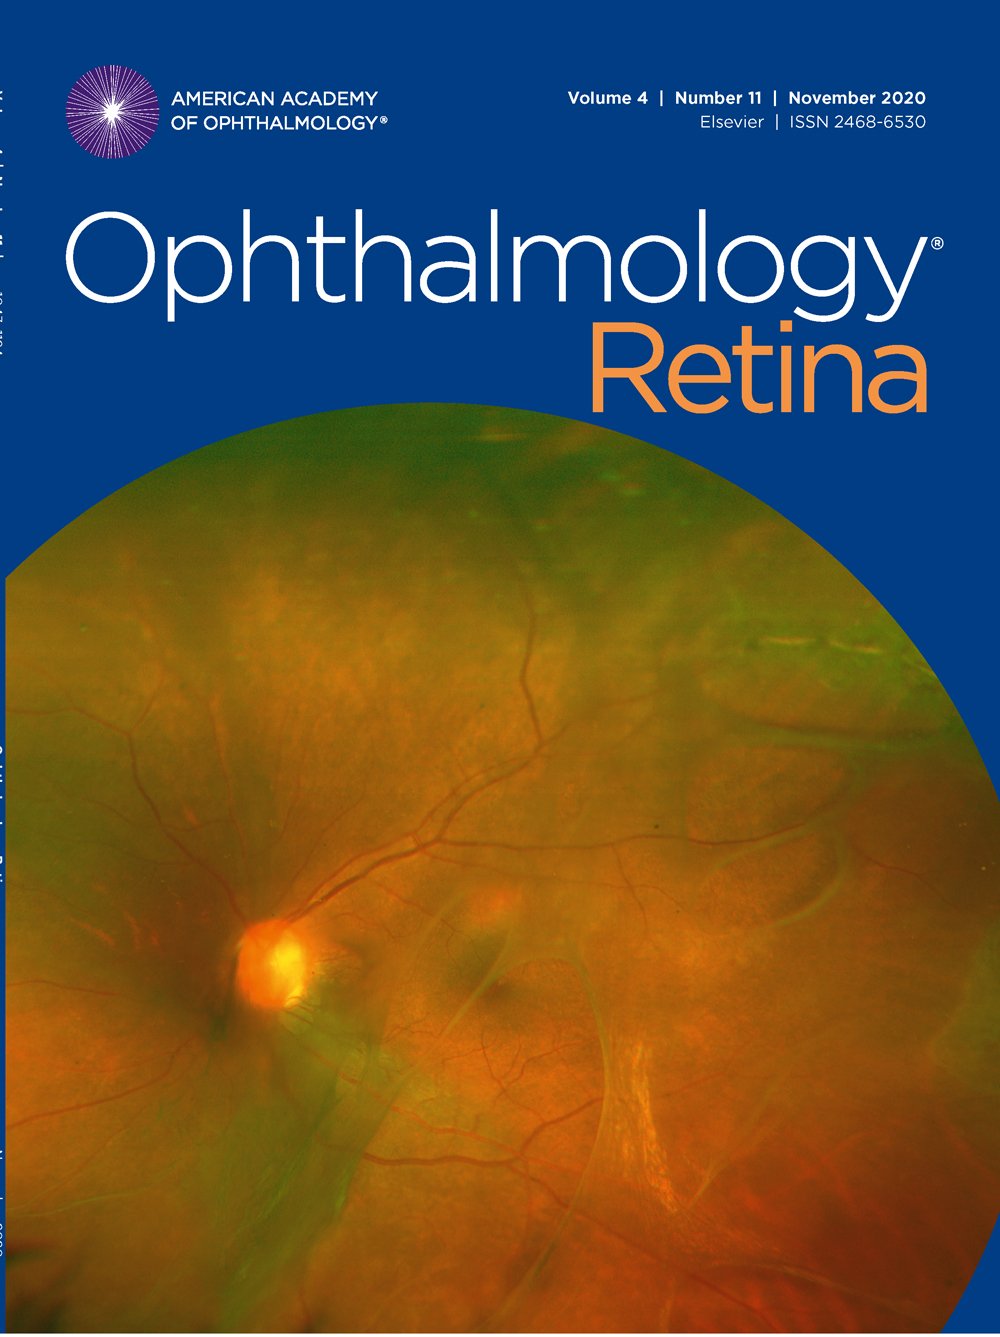 Ophthalmology Retina November 2020, Volume 4, Issue 11 image